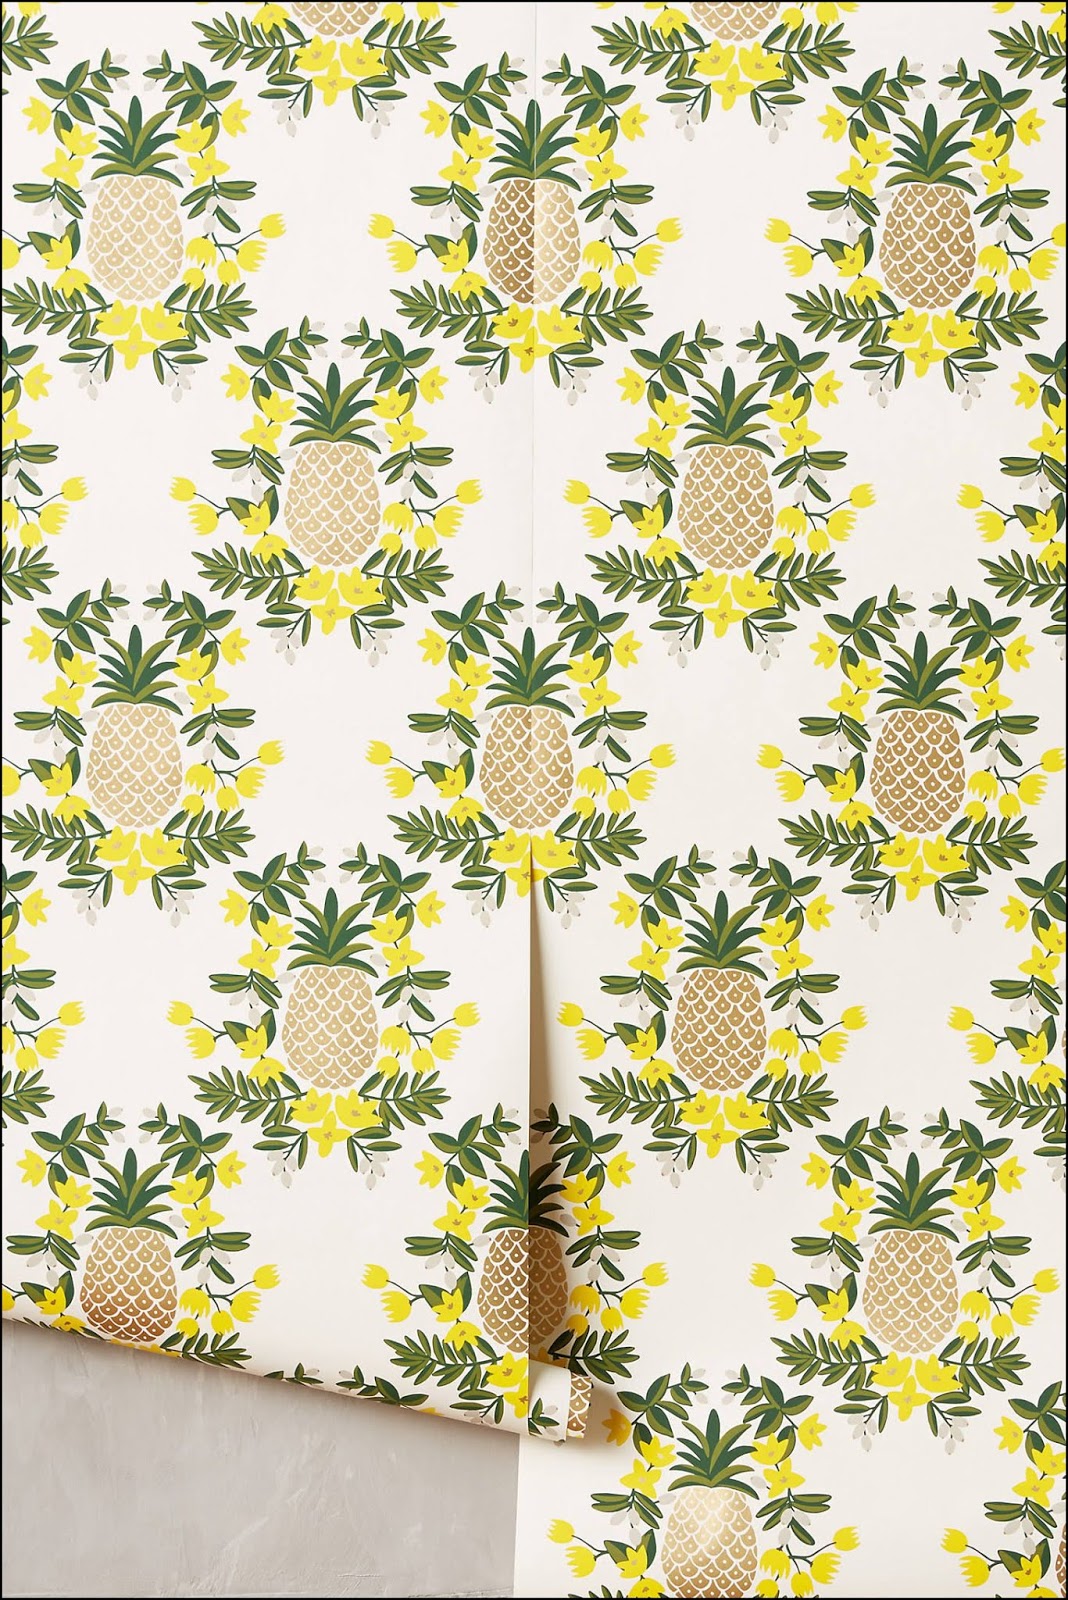 29+ Beautiful Pineapple Wallpaper (Part I) .